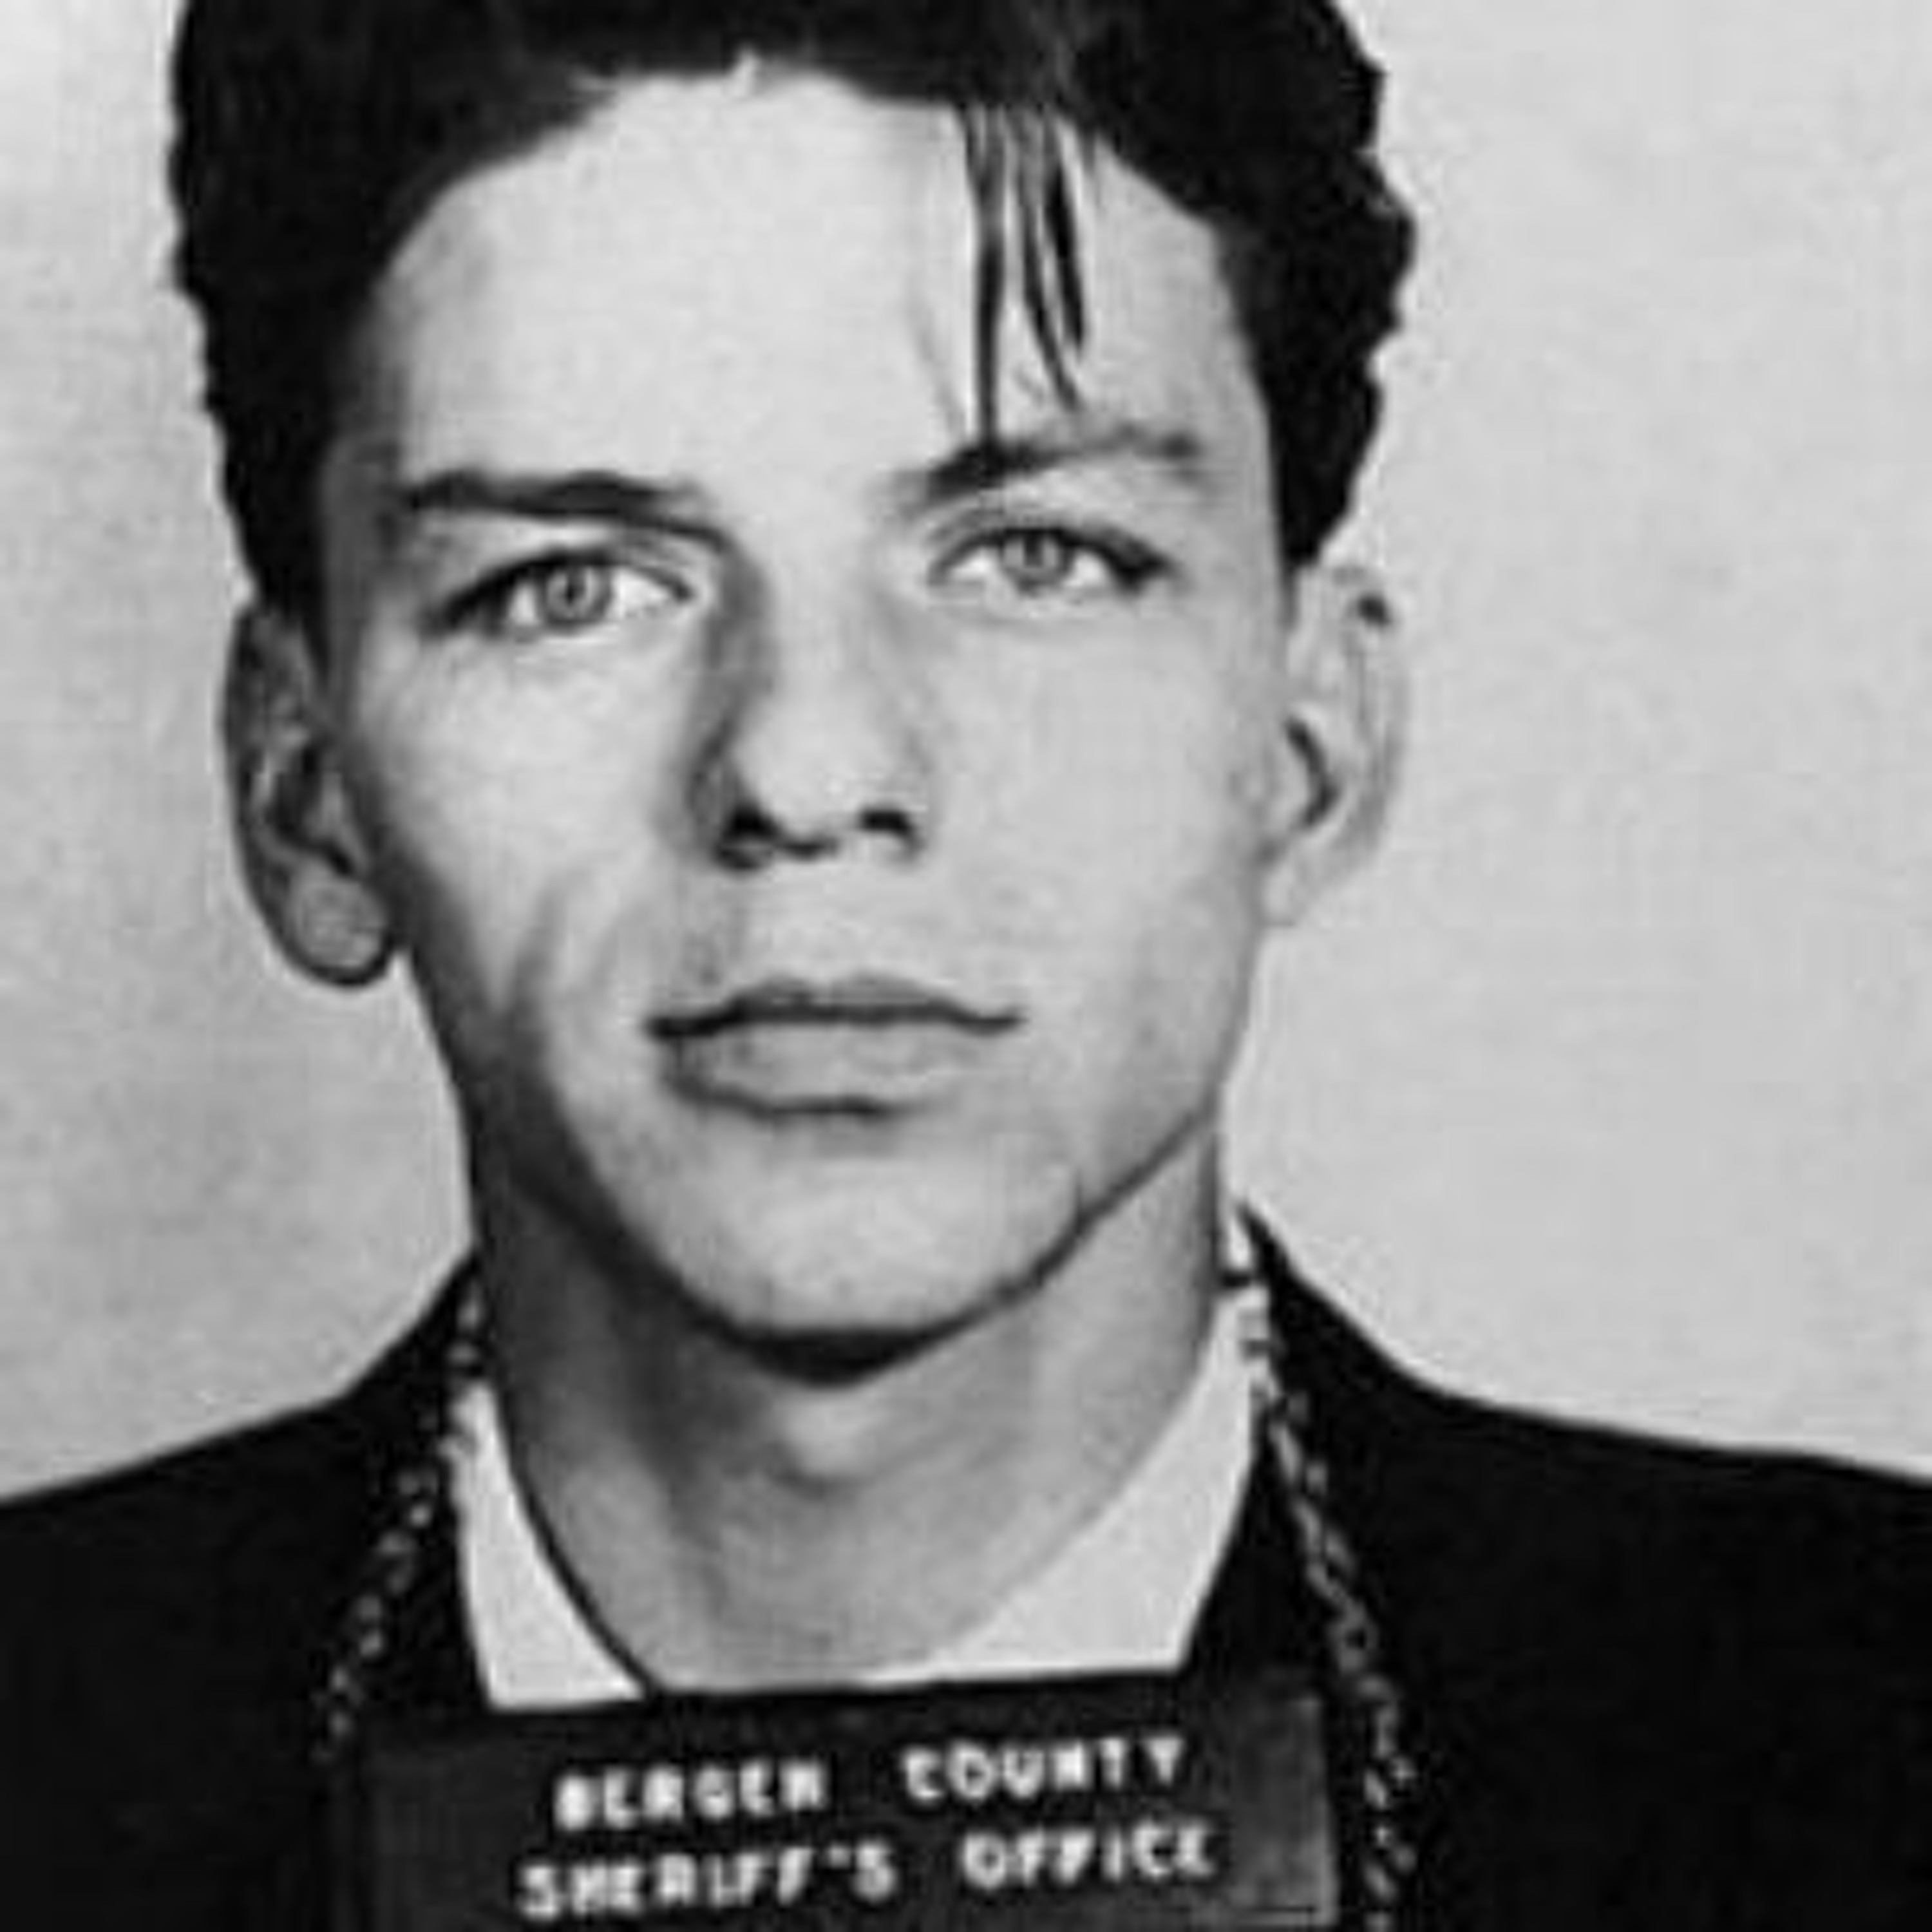 #64 Frank Sinatra